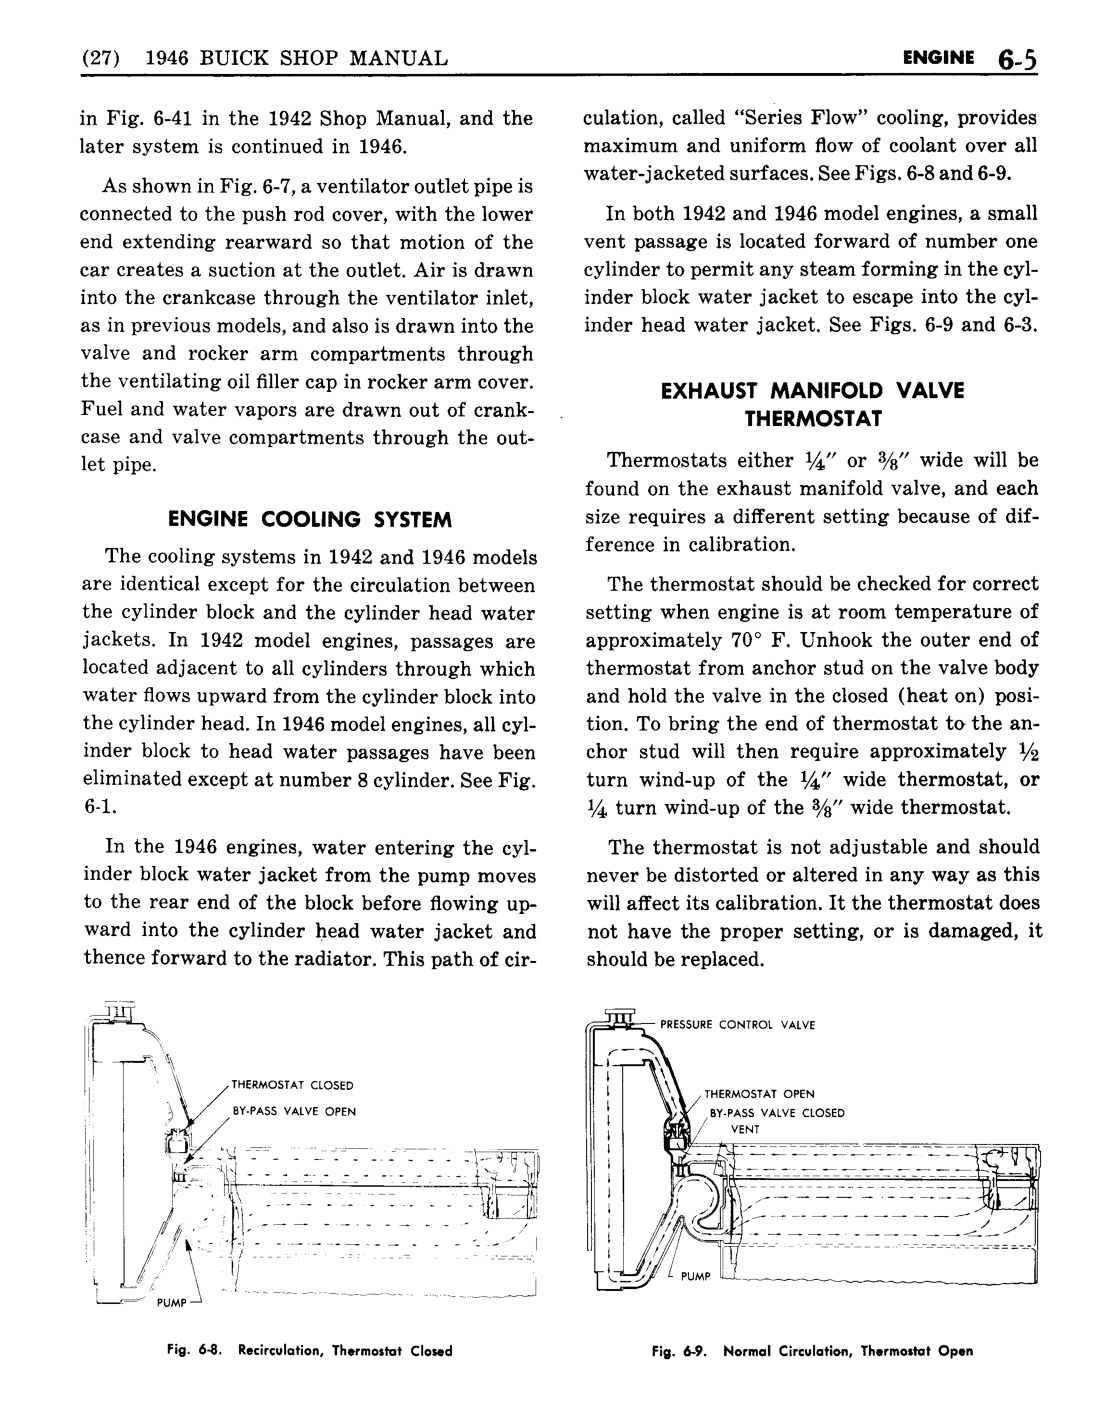 n_07 1946 Buick Shop Manual - Engine-005-005.jpg